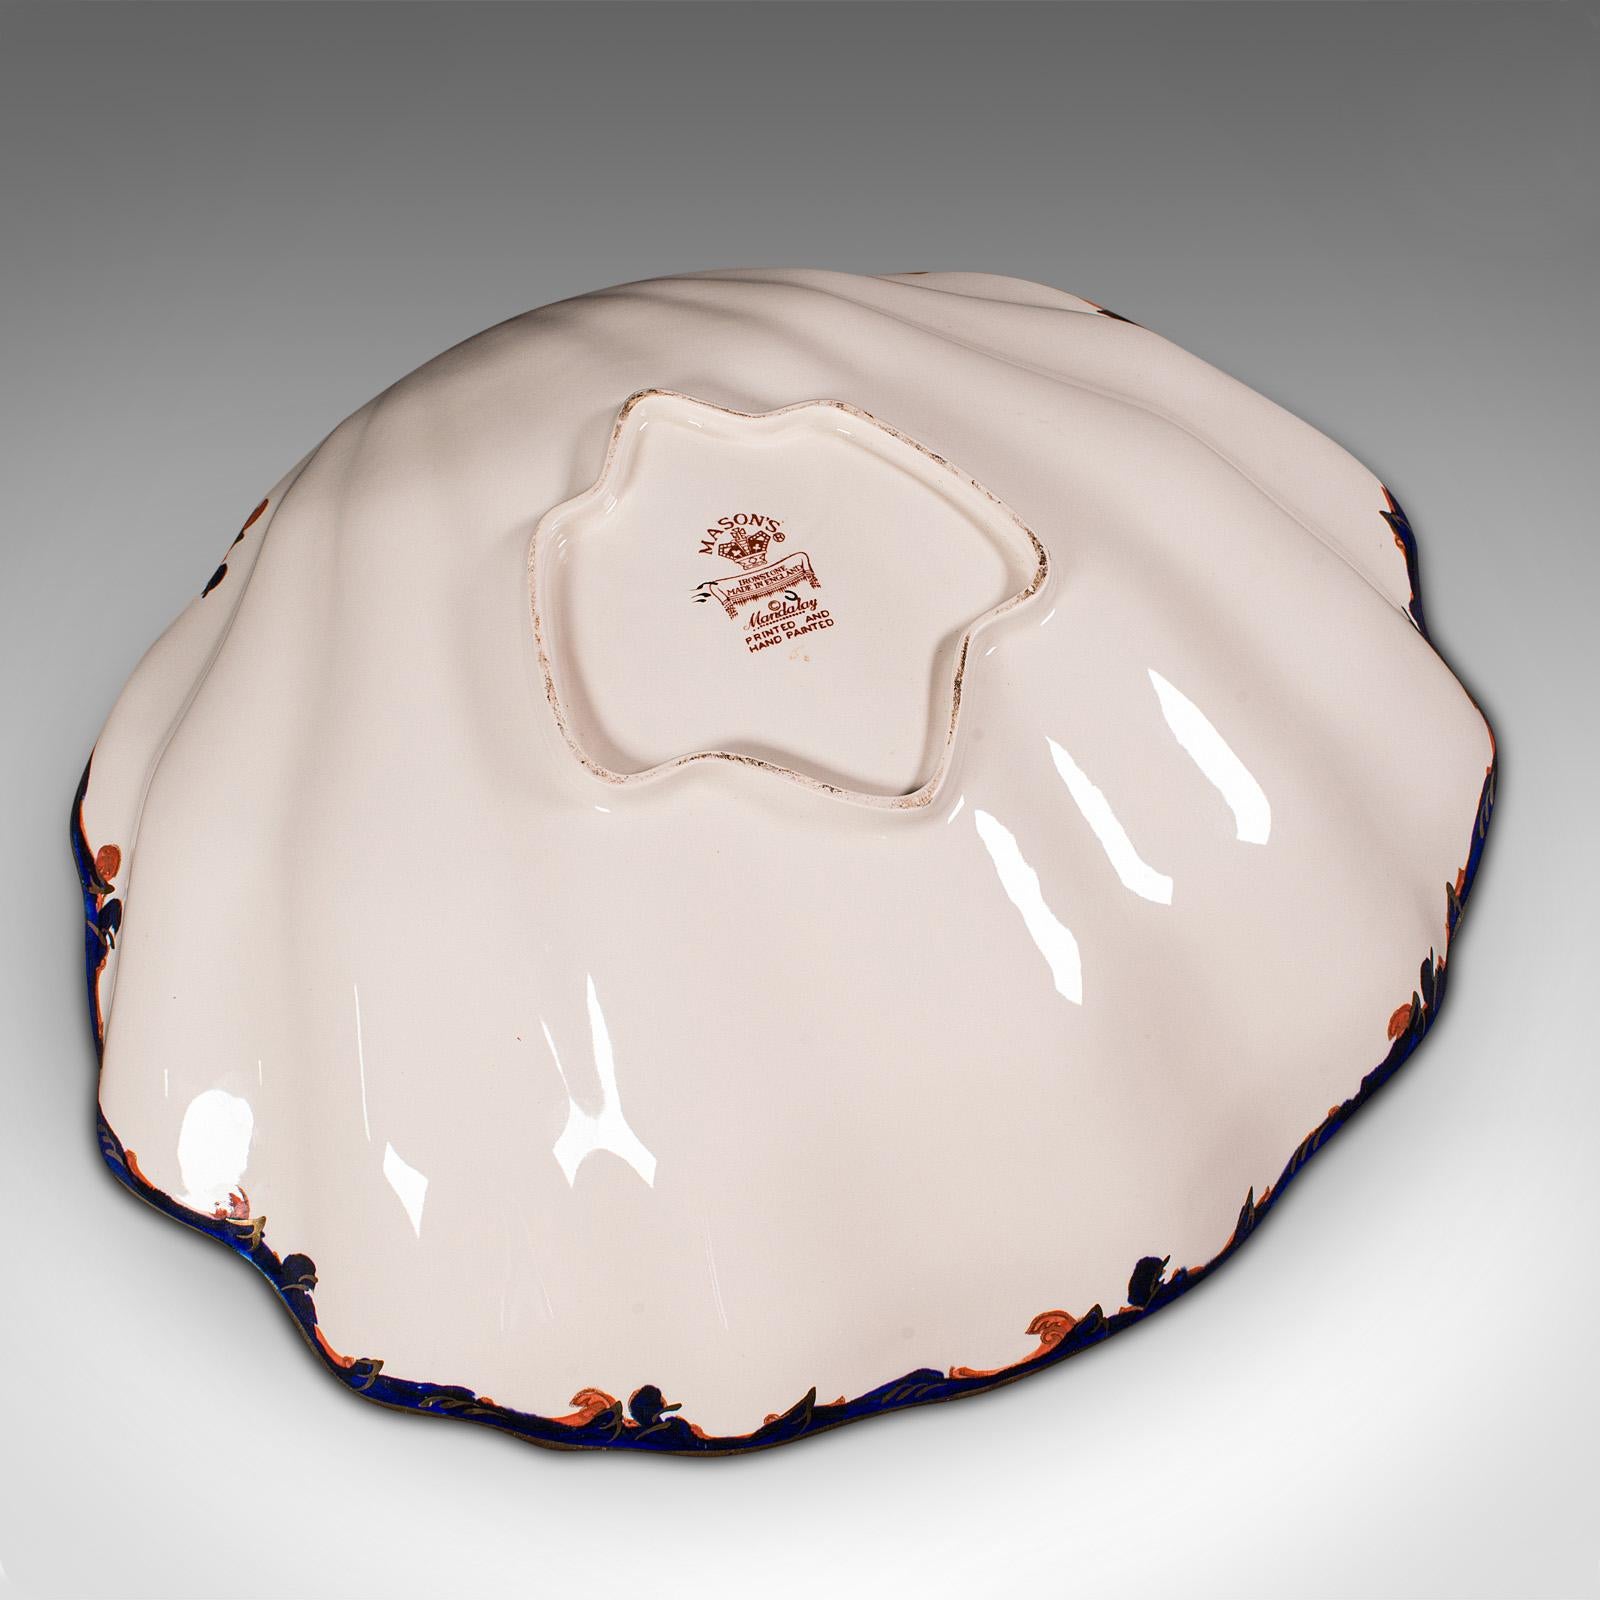 Large Vintage Shell Shaped Fruit Bowl, English Ceramic, Decorative, Serving Dish For Sale 3